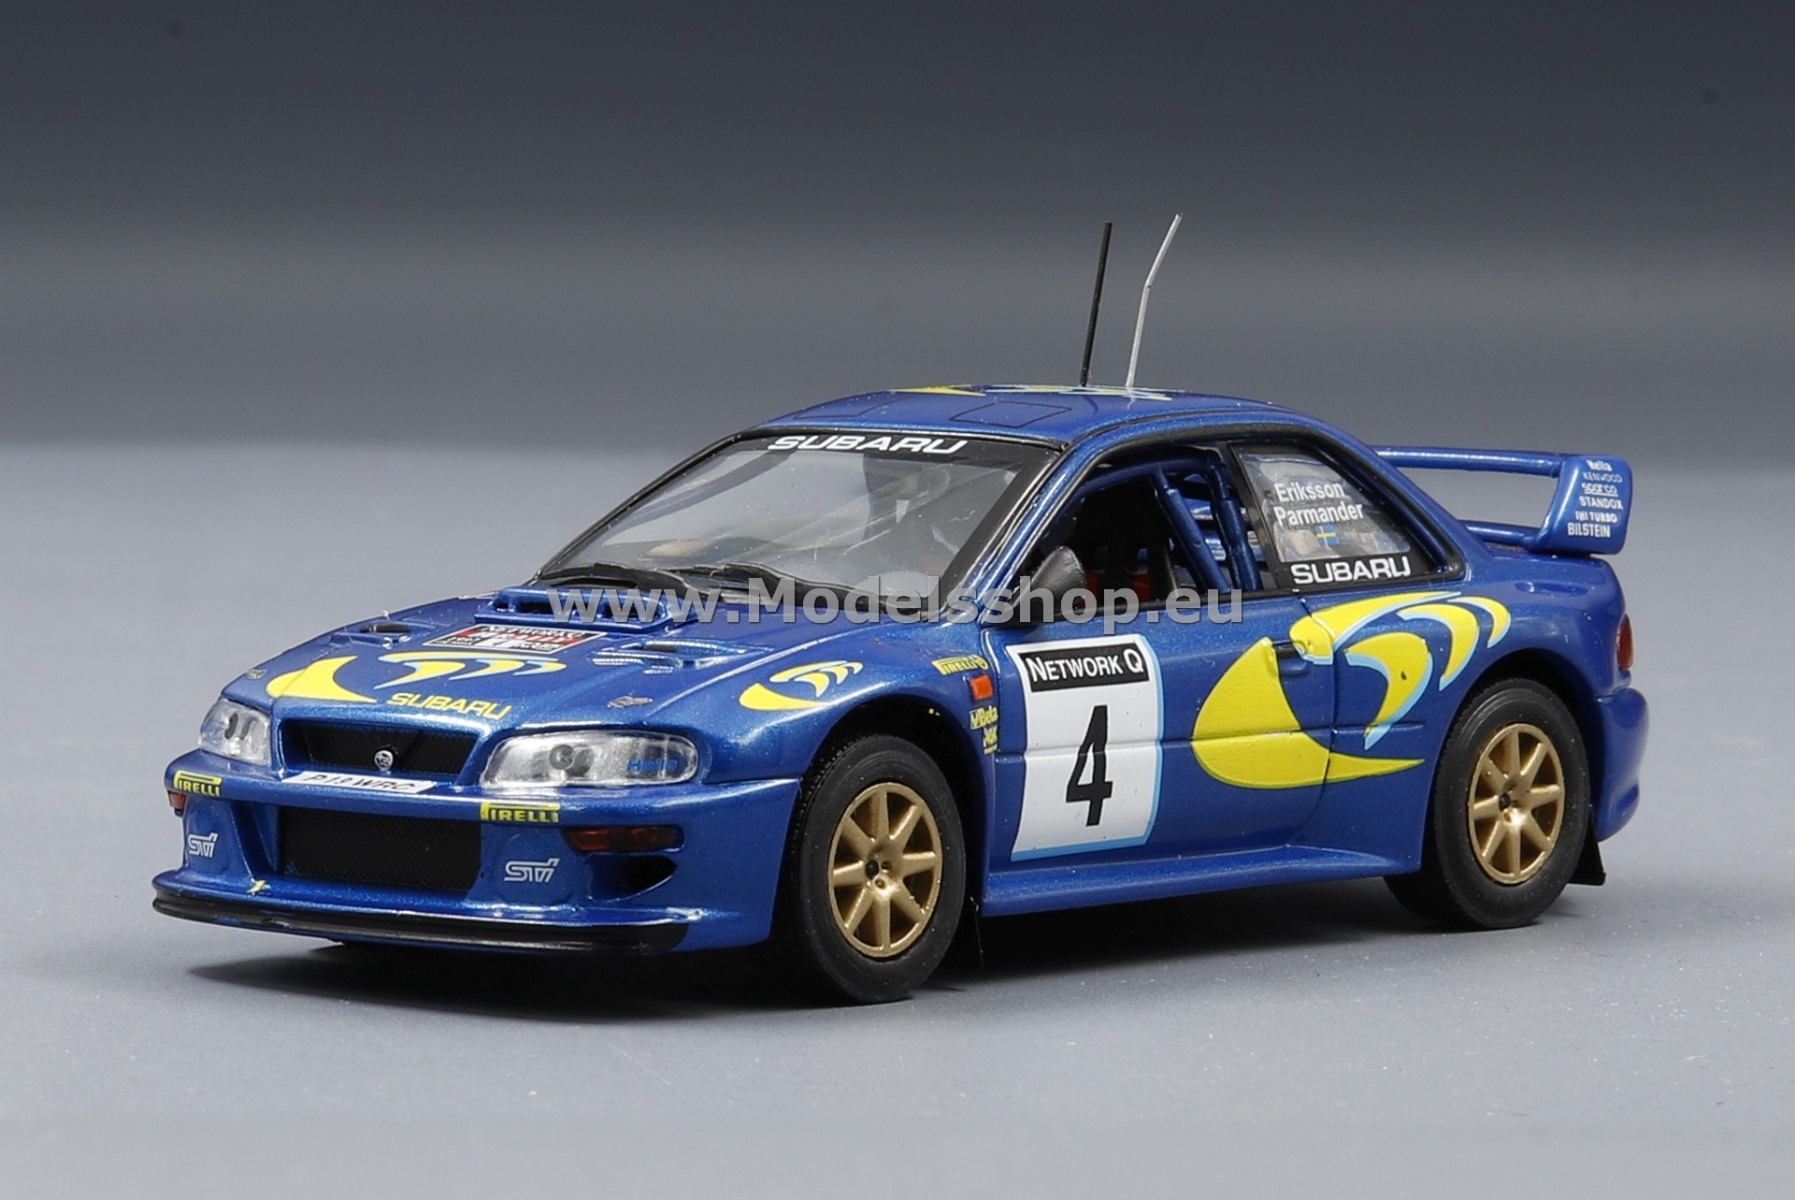 Subaru Impreza S5 WRC, No.4, Rallye WM, RAC Rally 1997 / 25th RAC anniversary Edition, K.Eriksson/S.Parmander